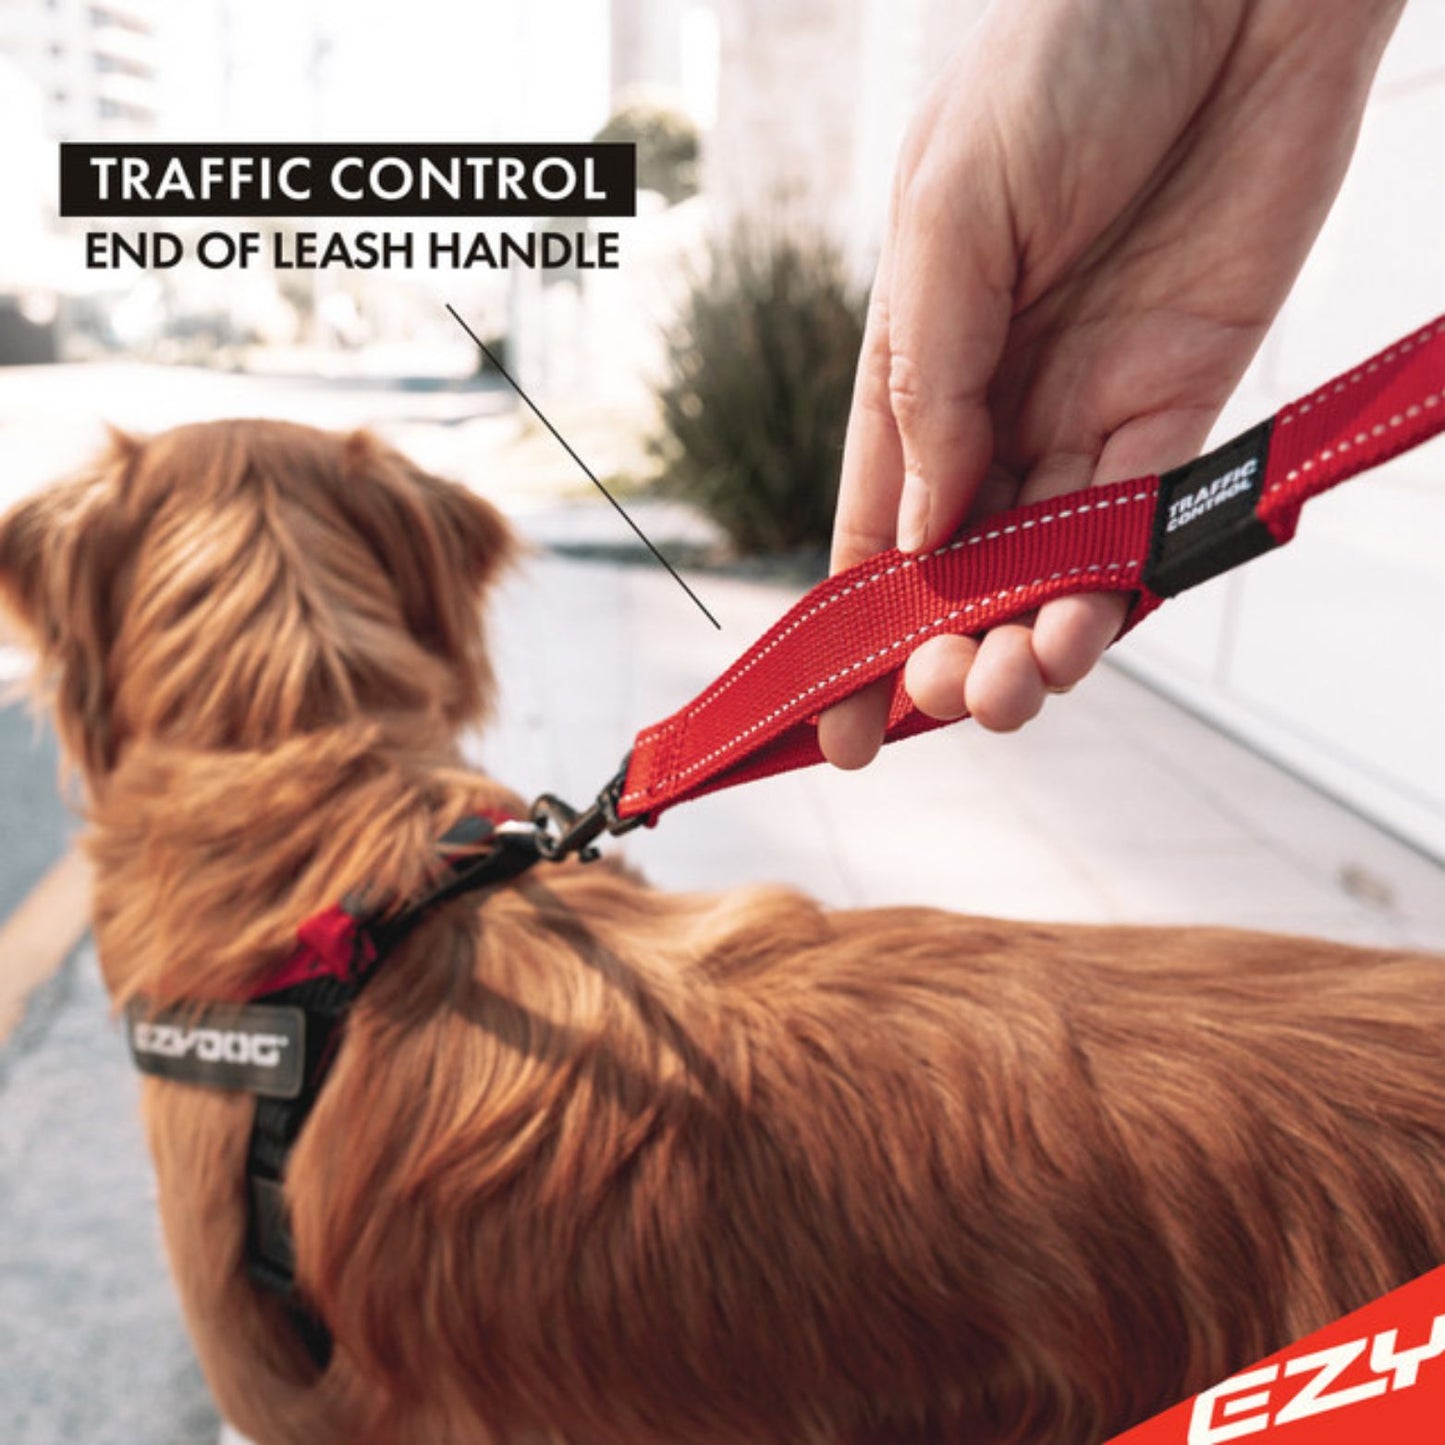 Zero Shock Bungee Dog Leash